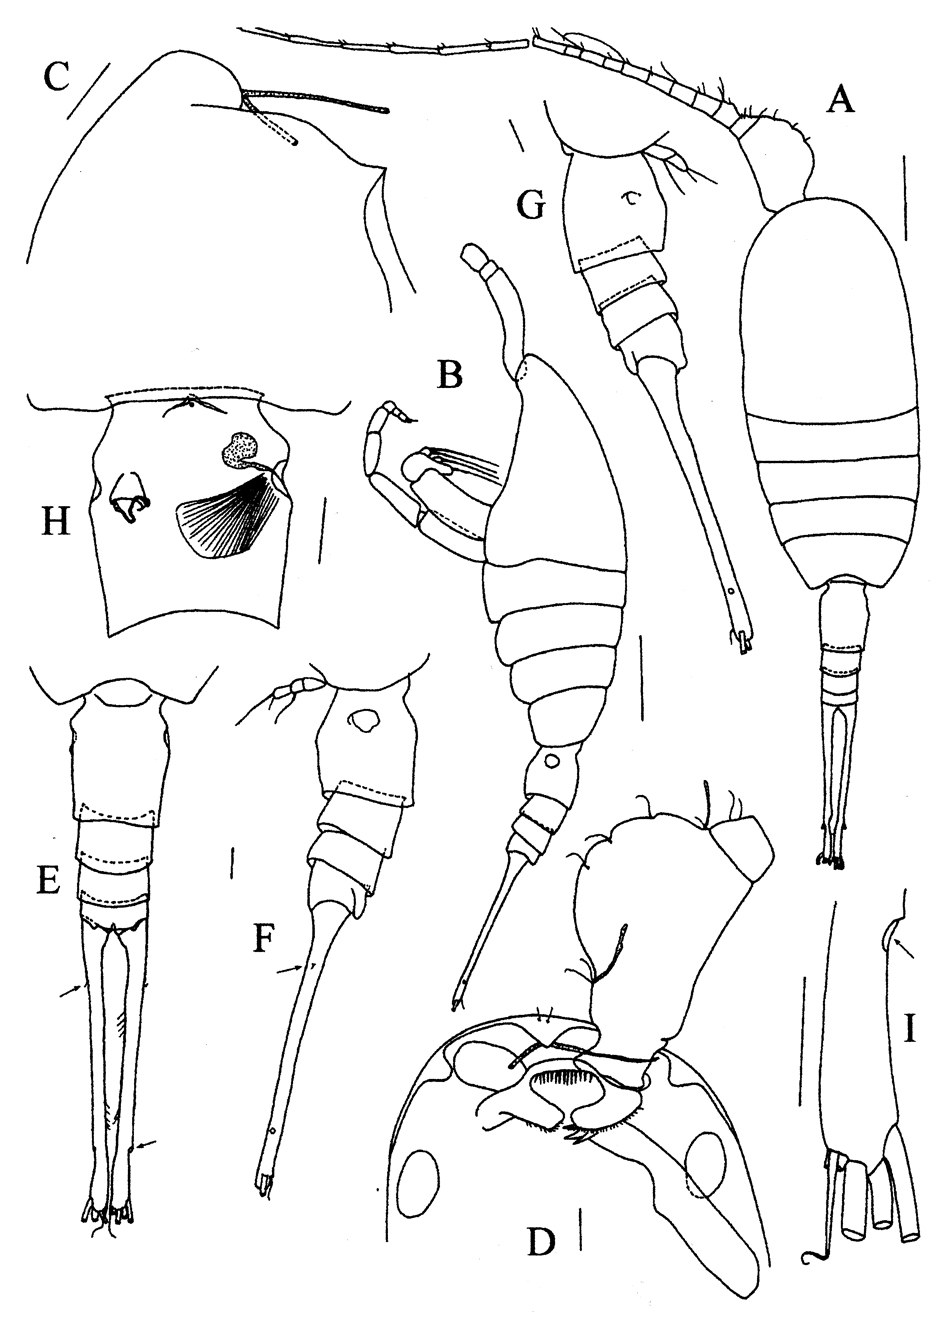 Species Lamiantennula longifurca - Plate 1 of morphological figures